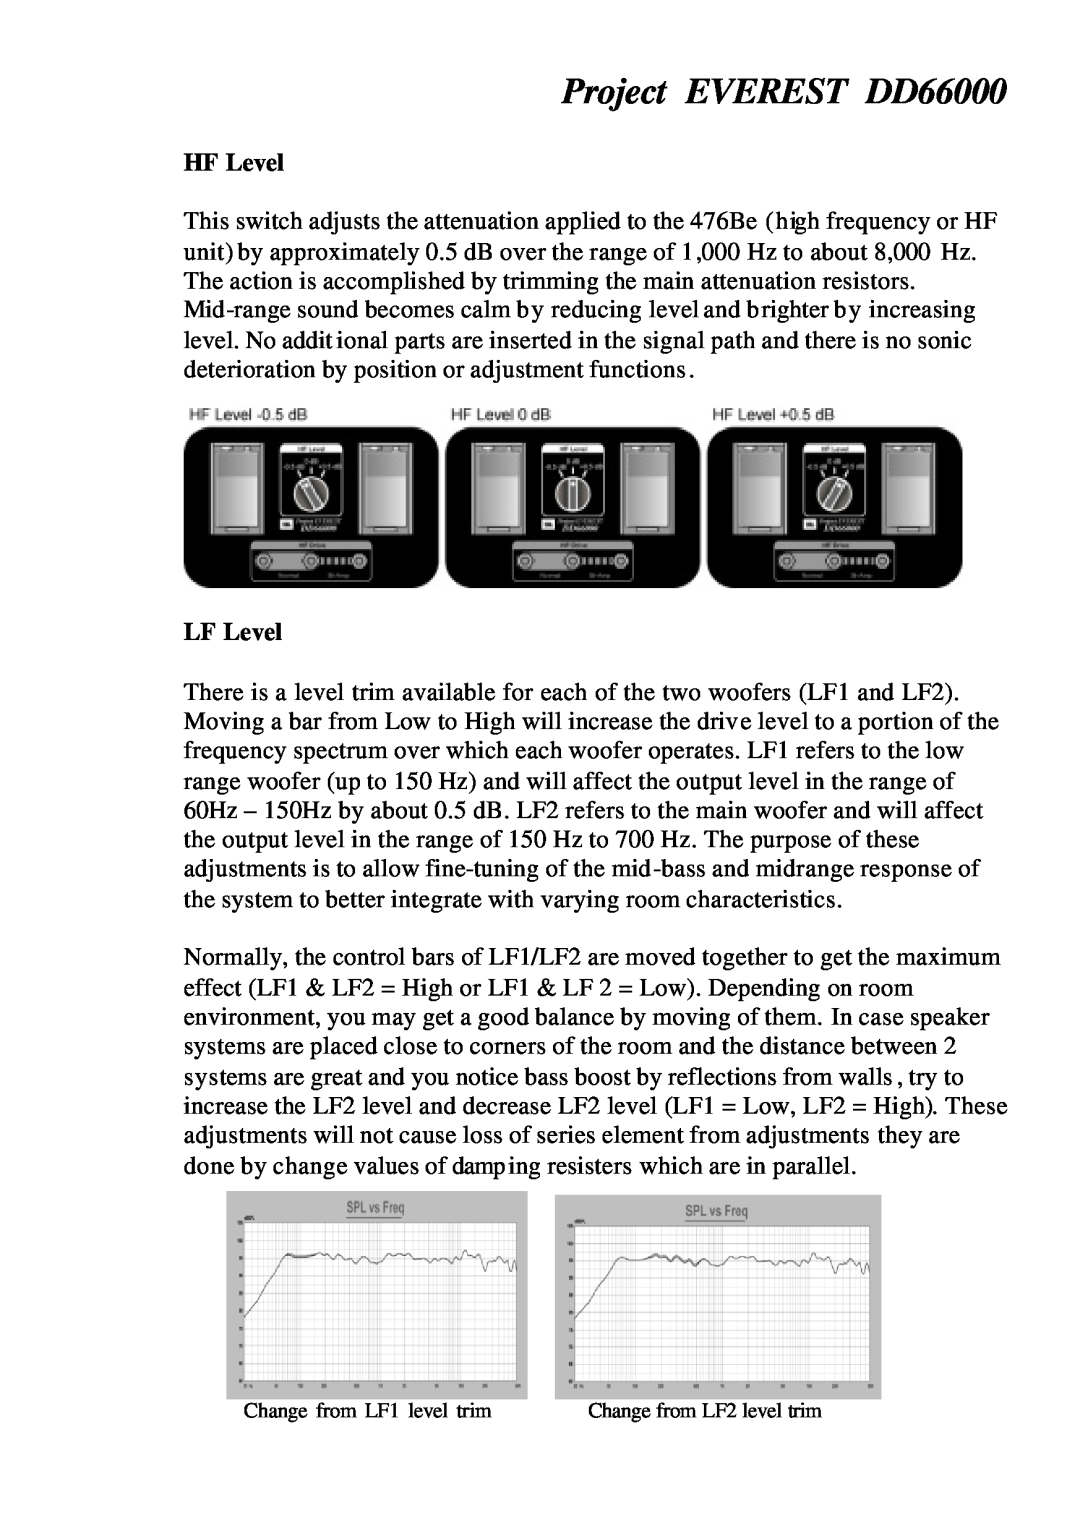 JBL manual Project EVEREST DD66000, HF Level, LF Level, Change from LF1 level trim 